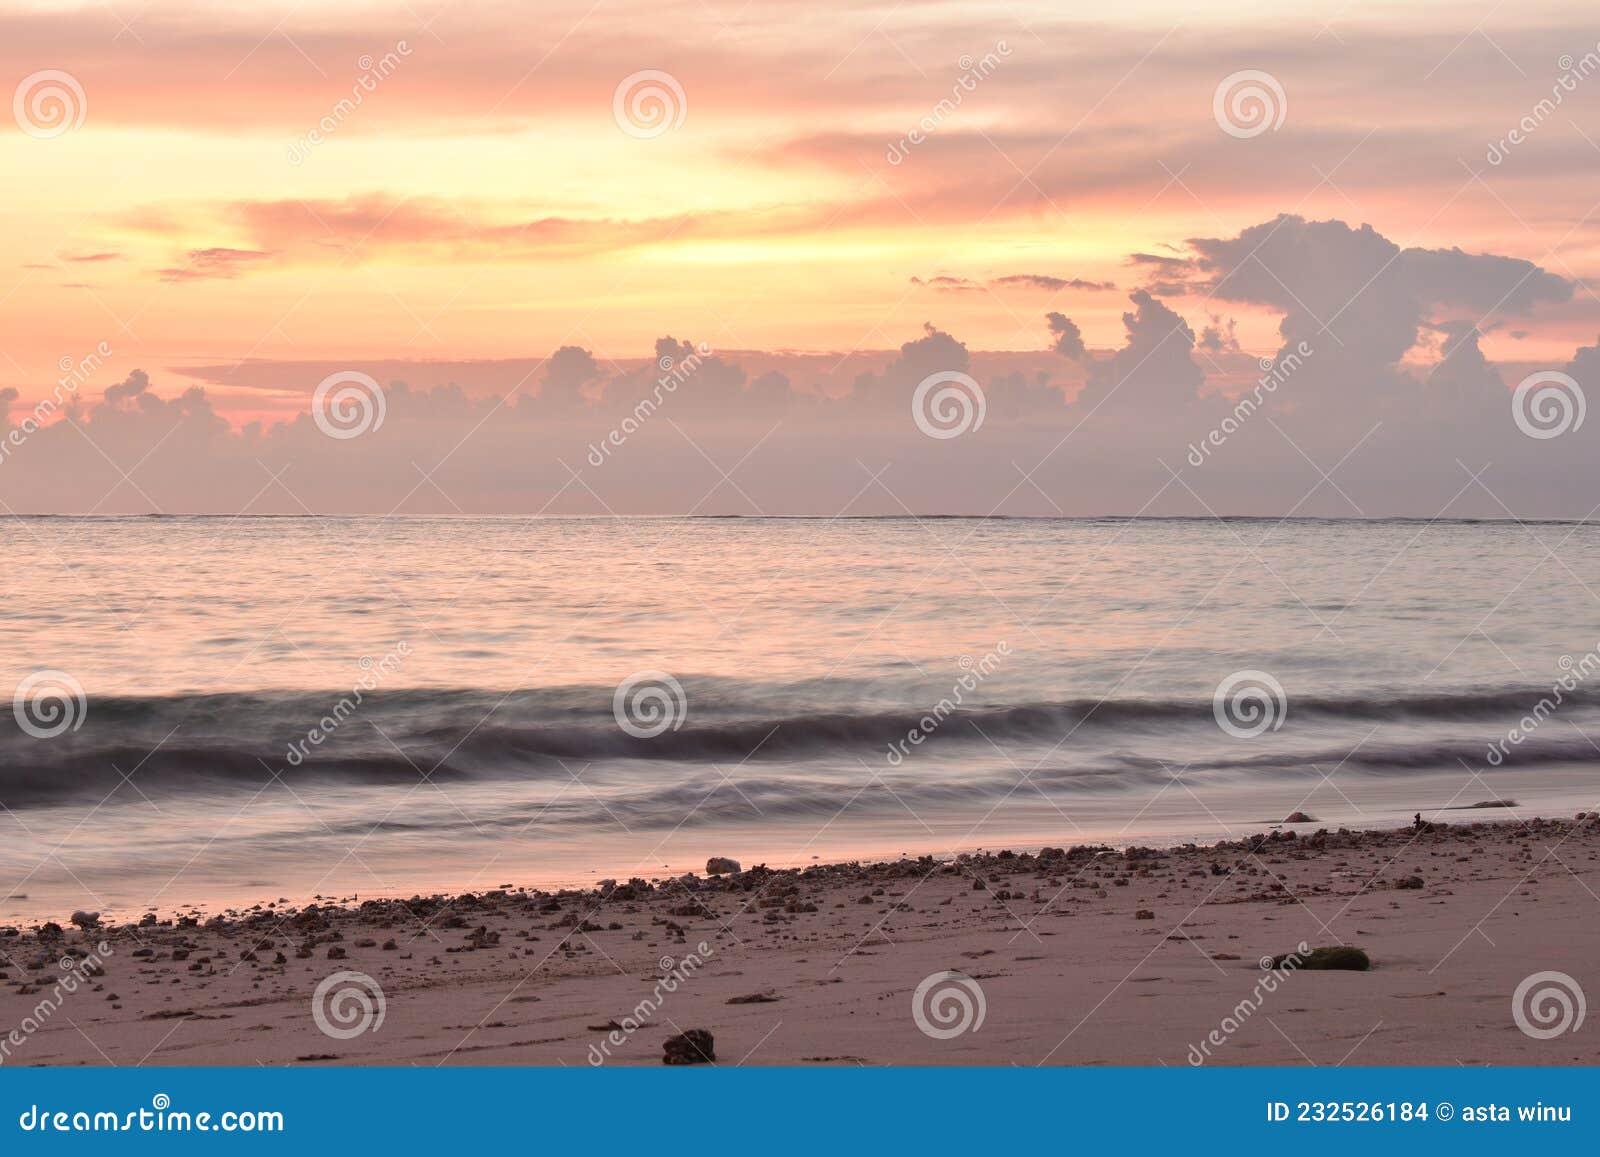 Basic File, Sunset on the Beach, Good for Learning Editing Stock Photo -  Image of dusk, beach: 232526184